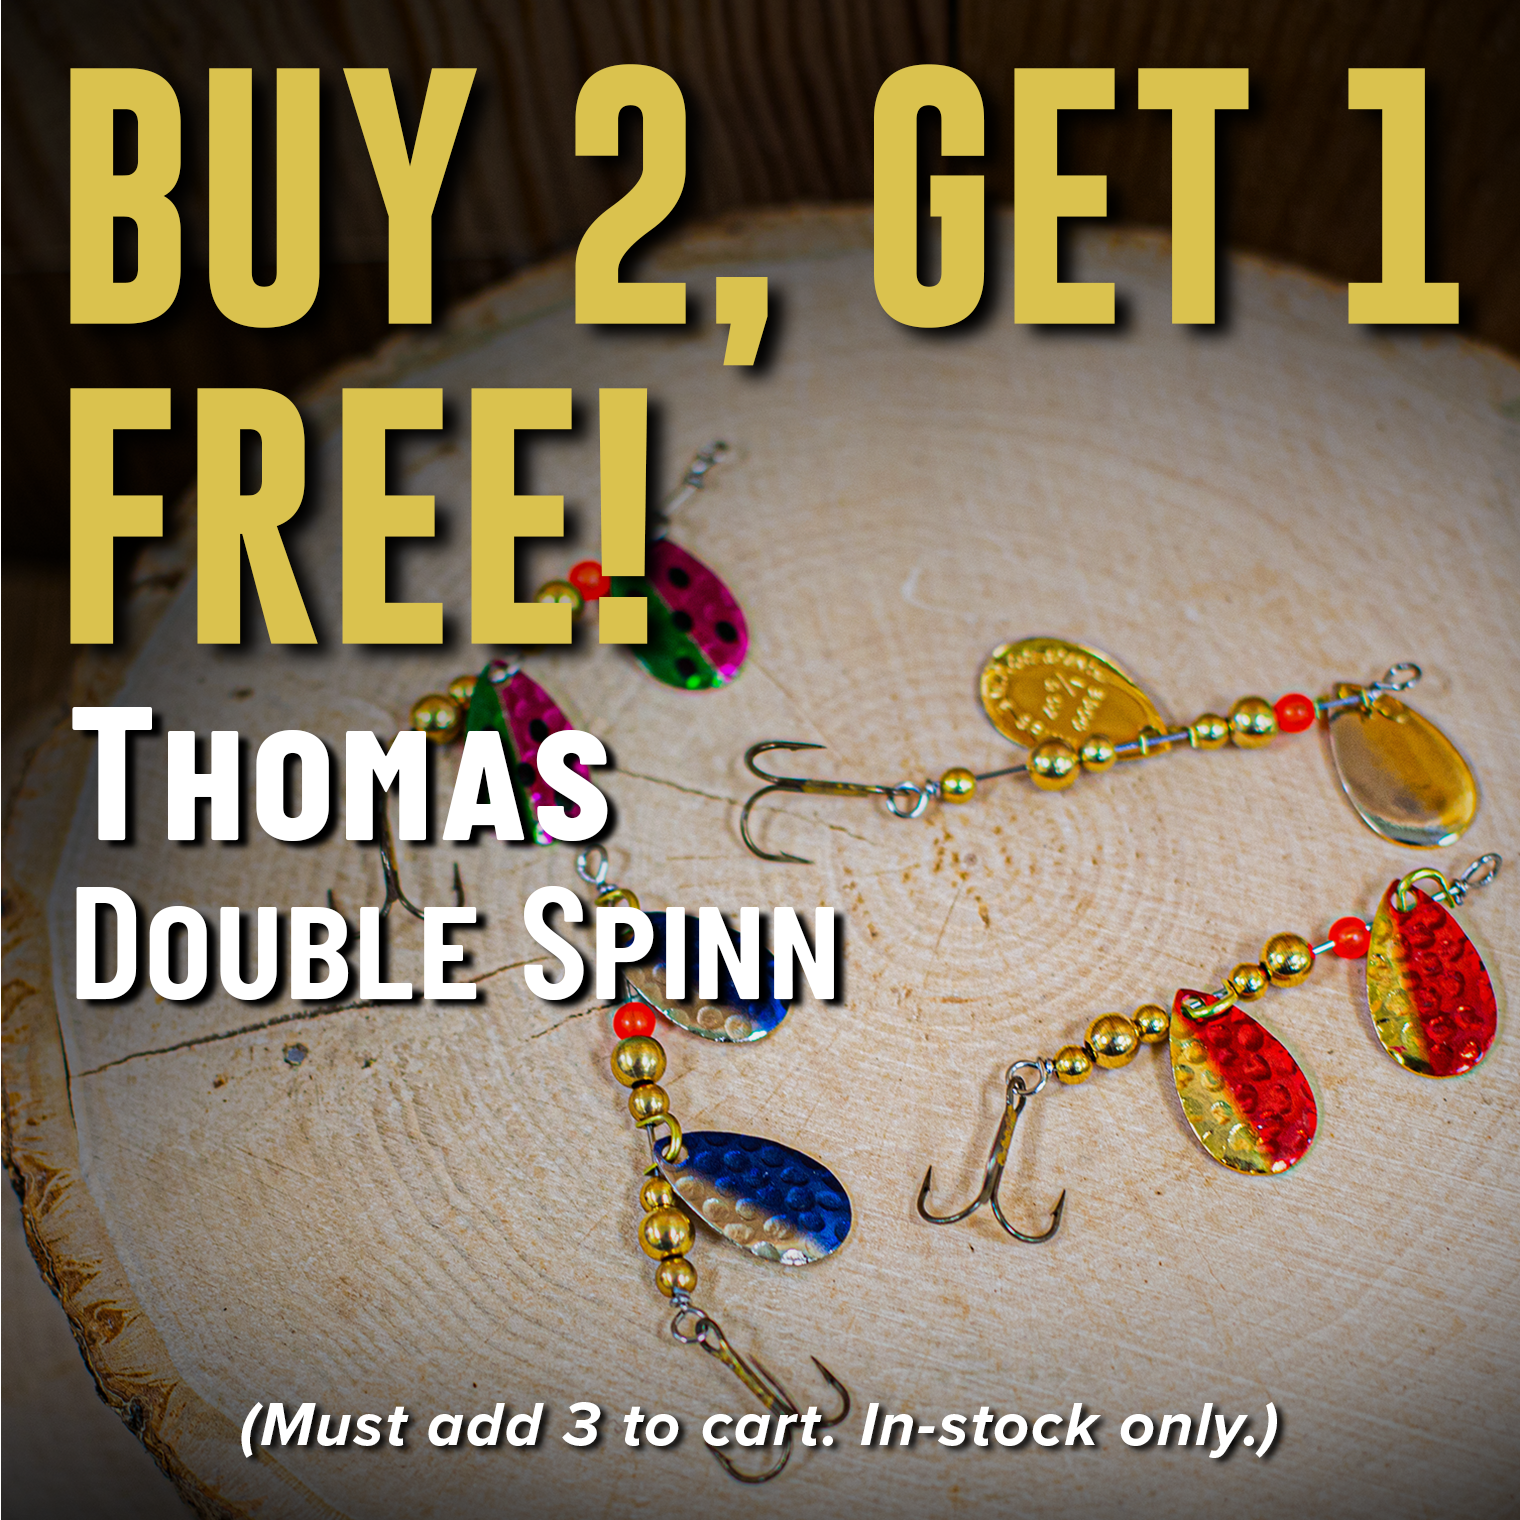 Buy 2, Get 1 Free! Thomas Double Spinn